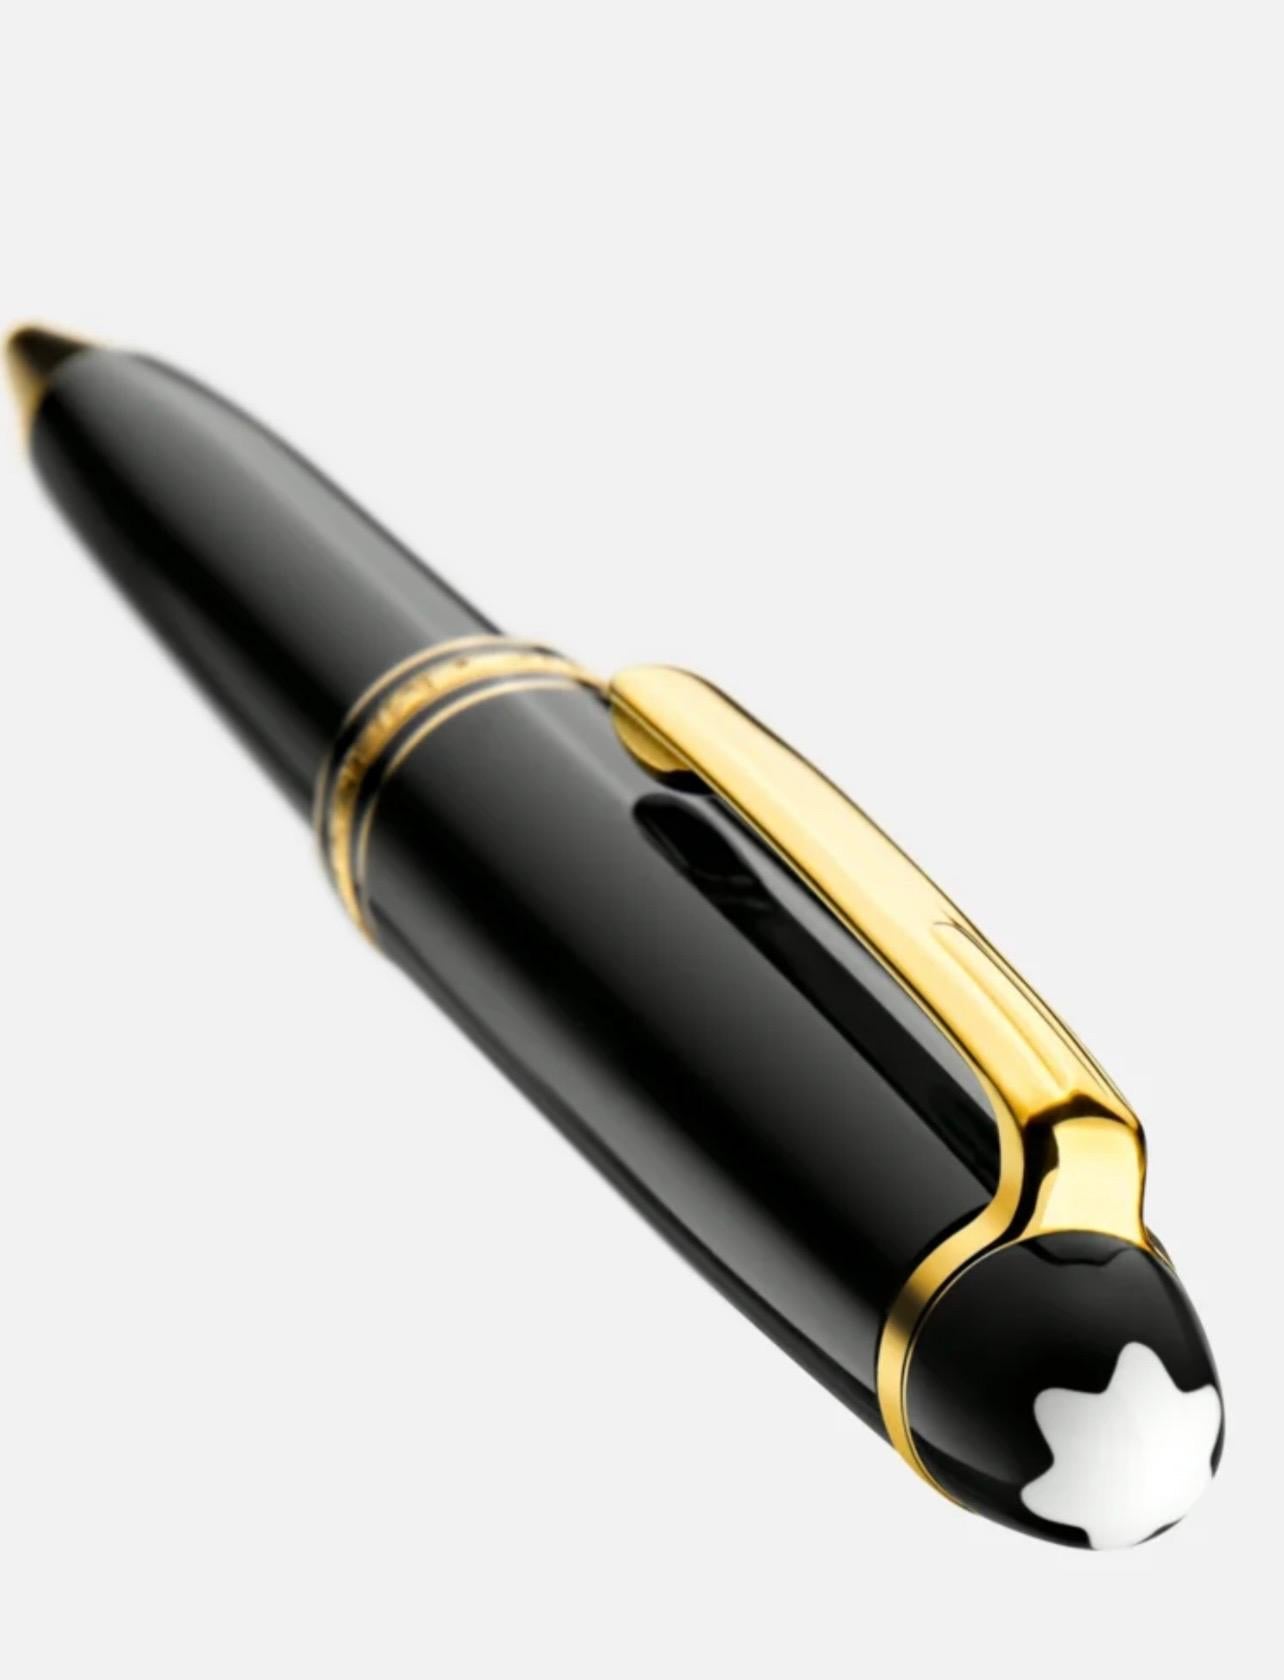 Women's or Men's Montblanc Meisterstück Gold-Coated Ballpoint Pen, Excellent